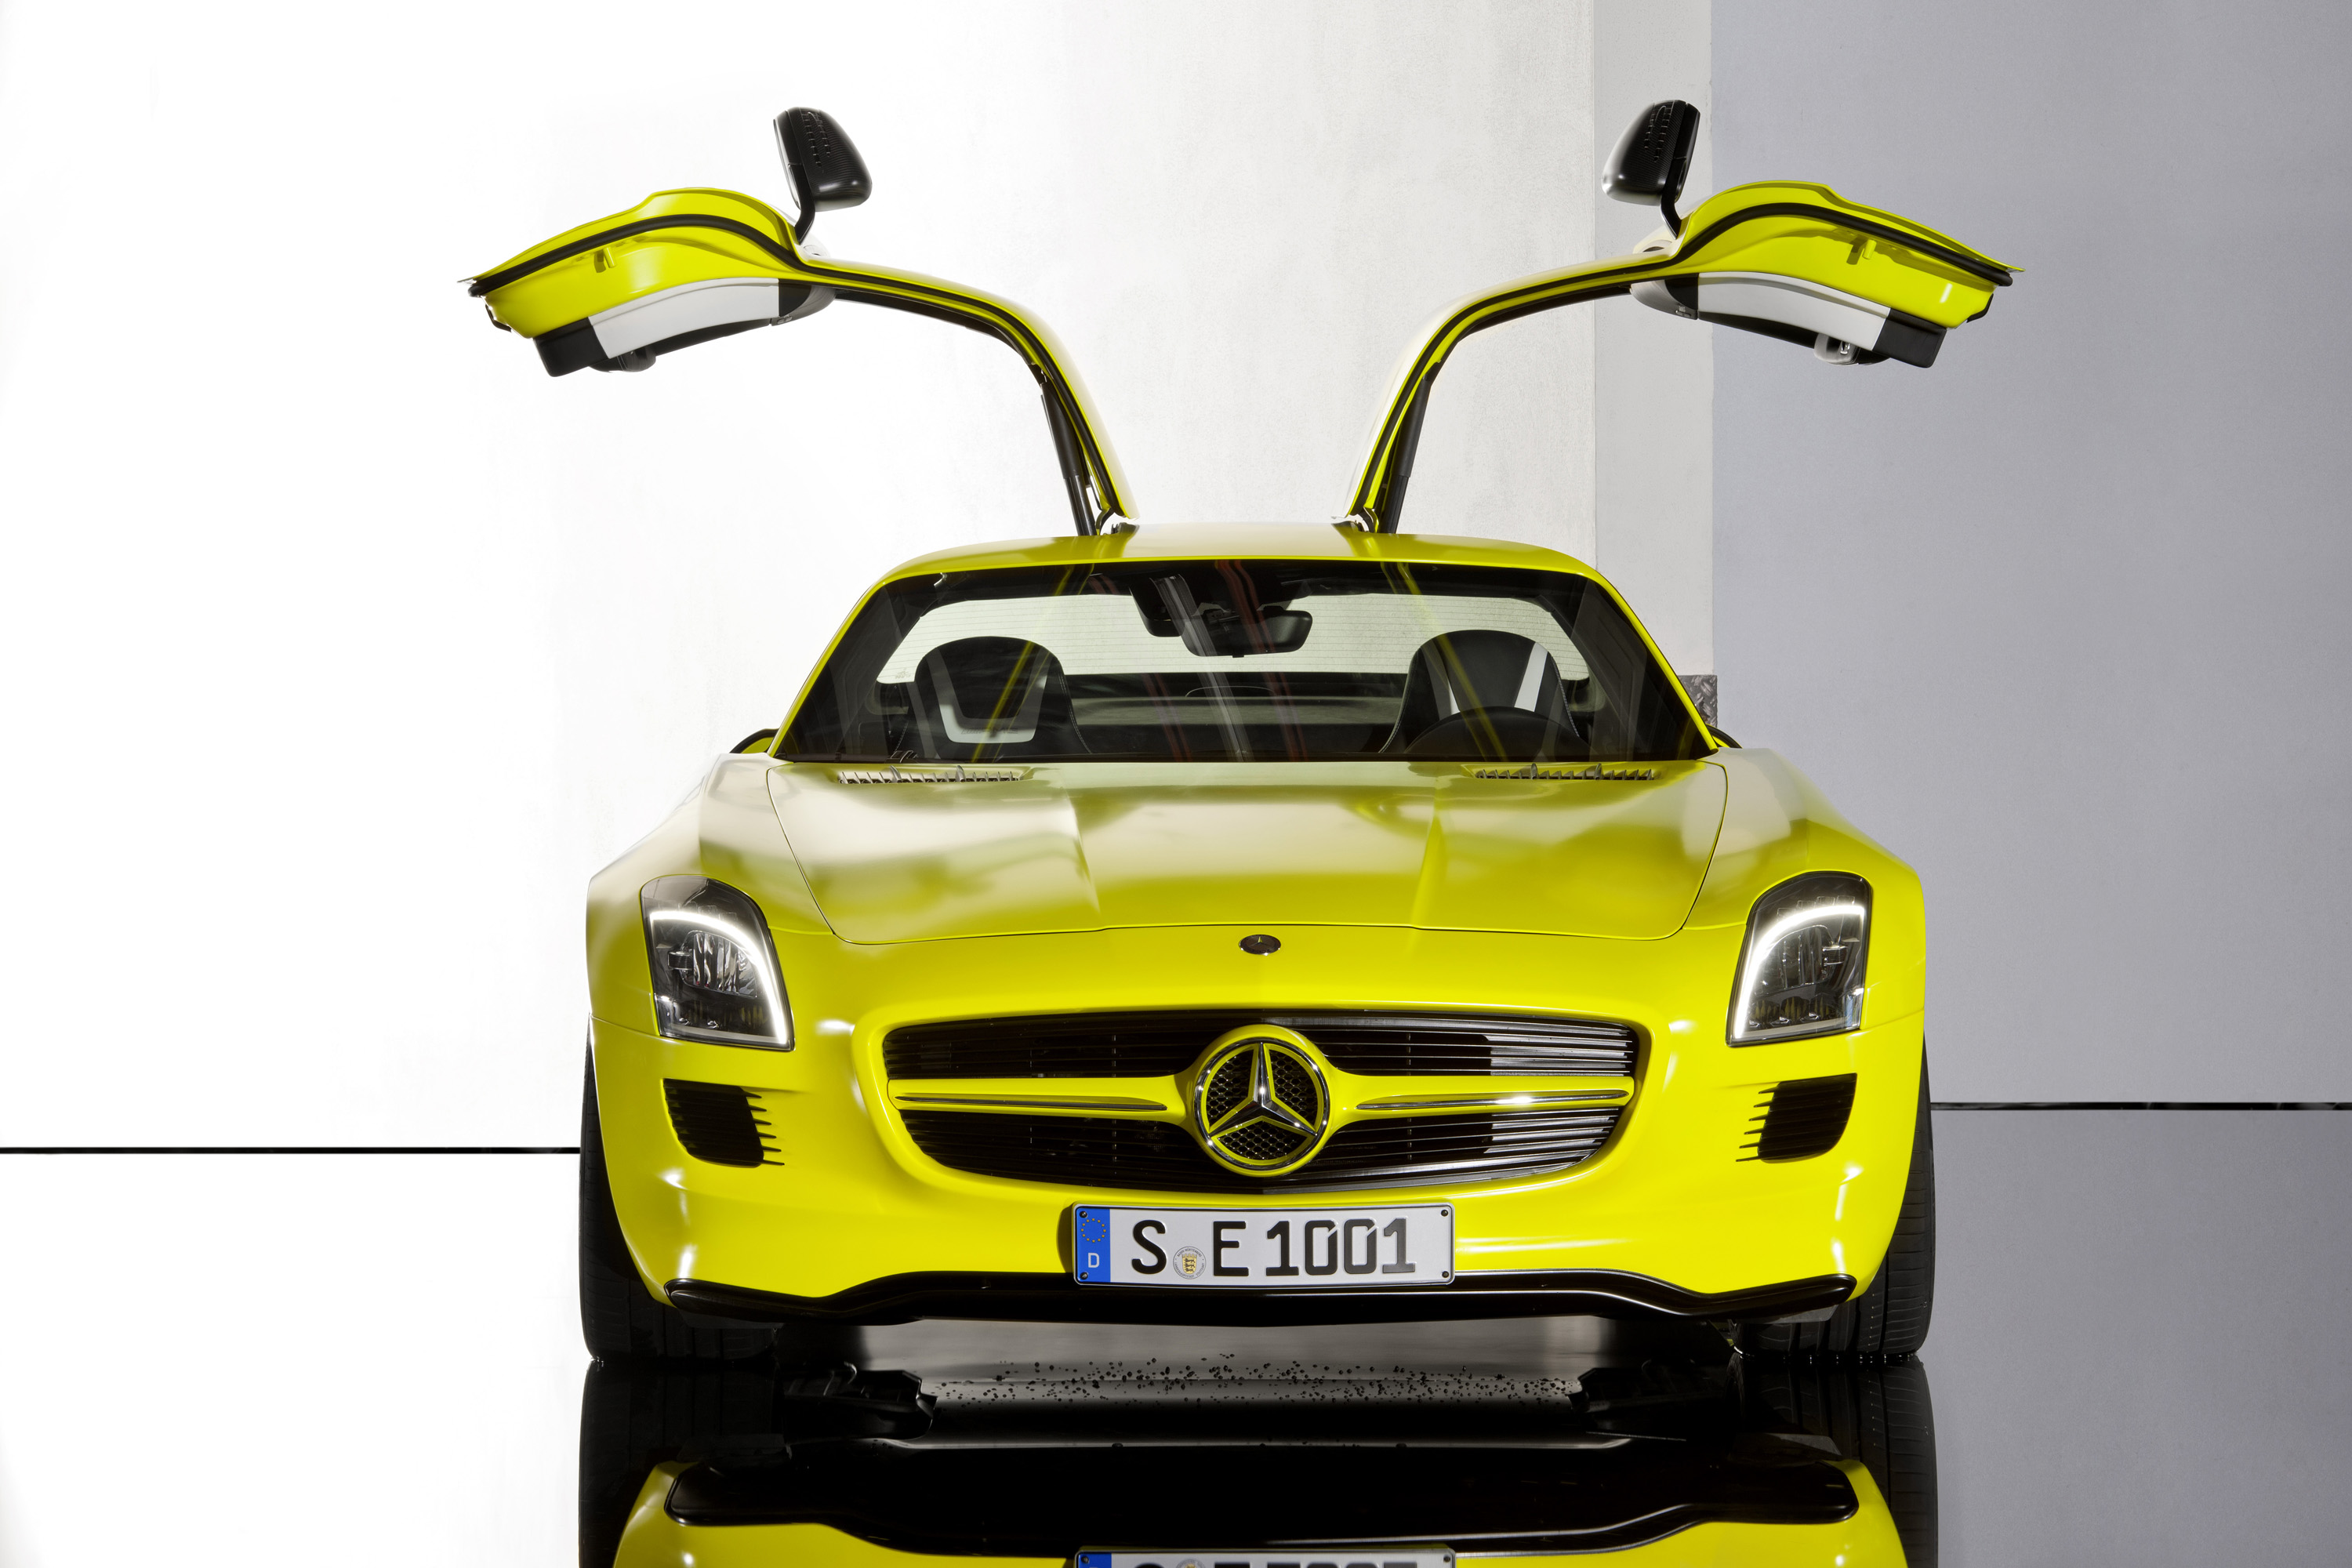 Mercedes-Benz SLS AMG E-CELL